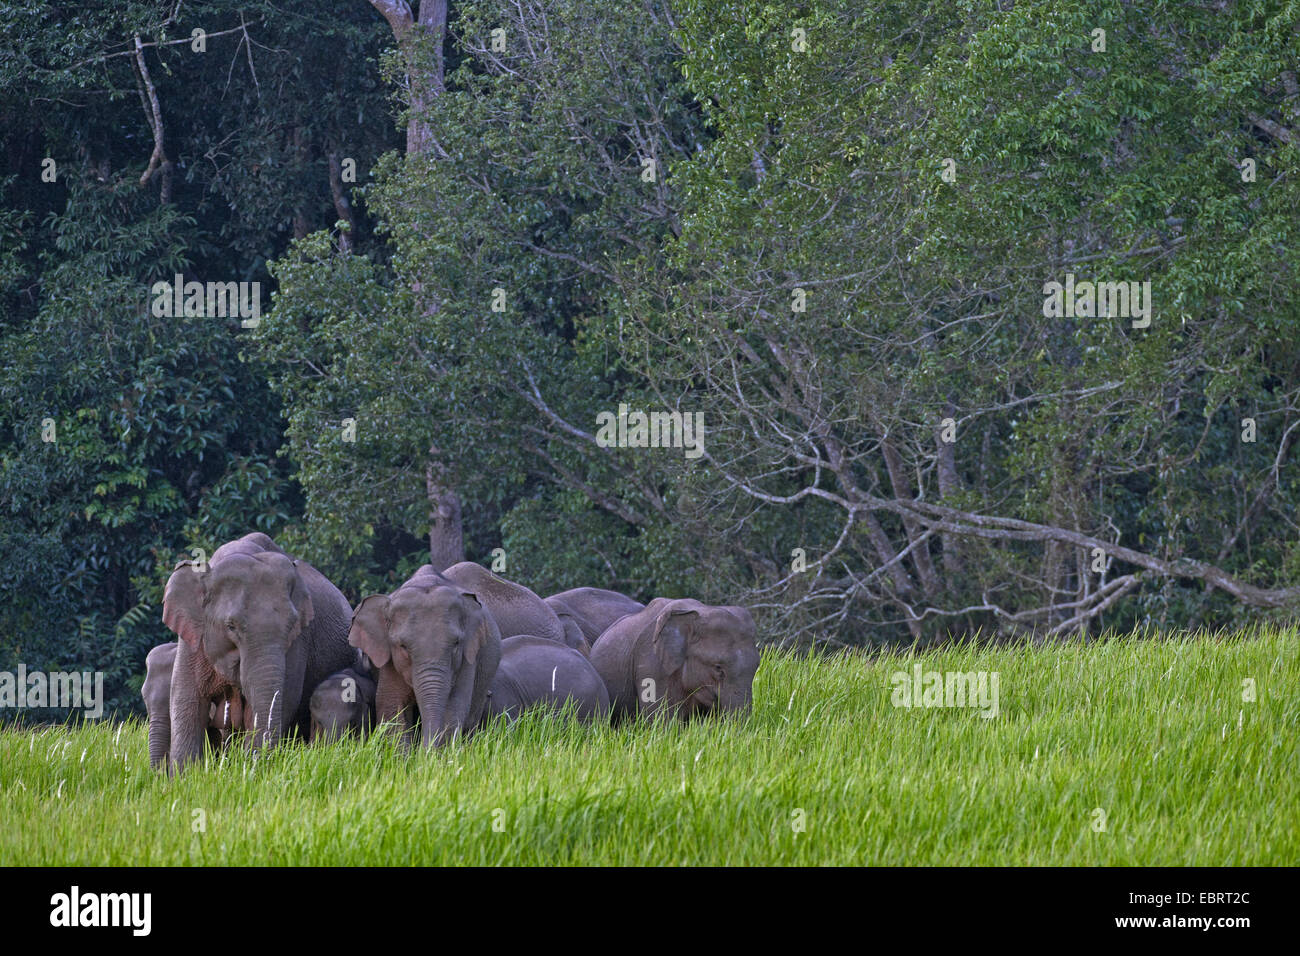 Asiatic elephant, Asian elephant (Elephas maximus), herd of elephants in a meadow at forest edge, Thailand, Khao Yai National Park Stock Photo